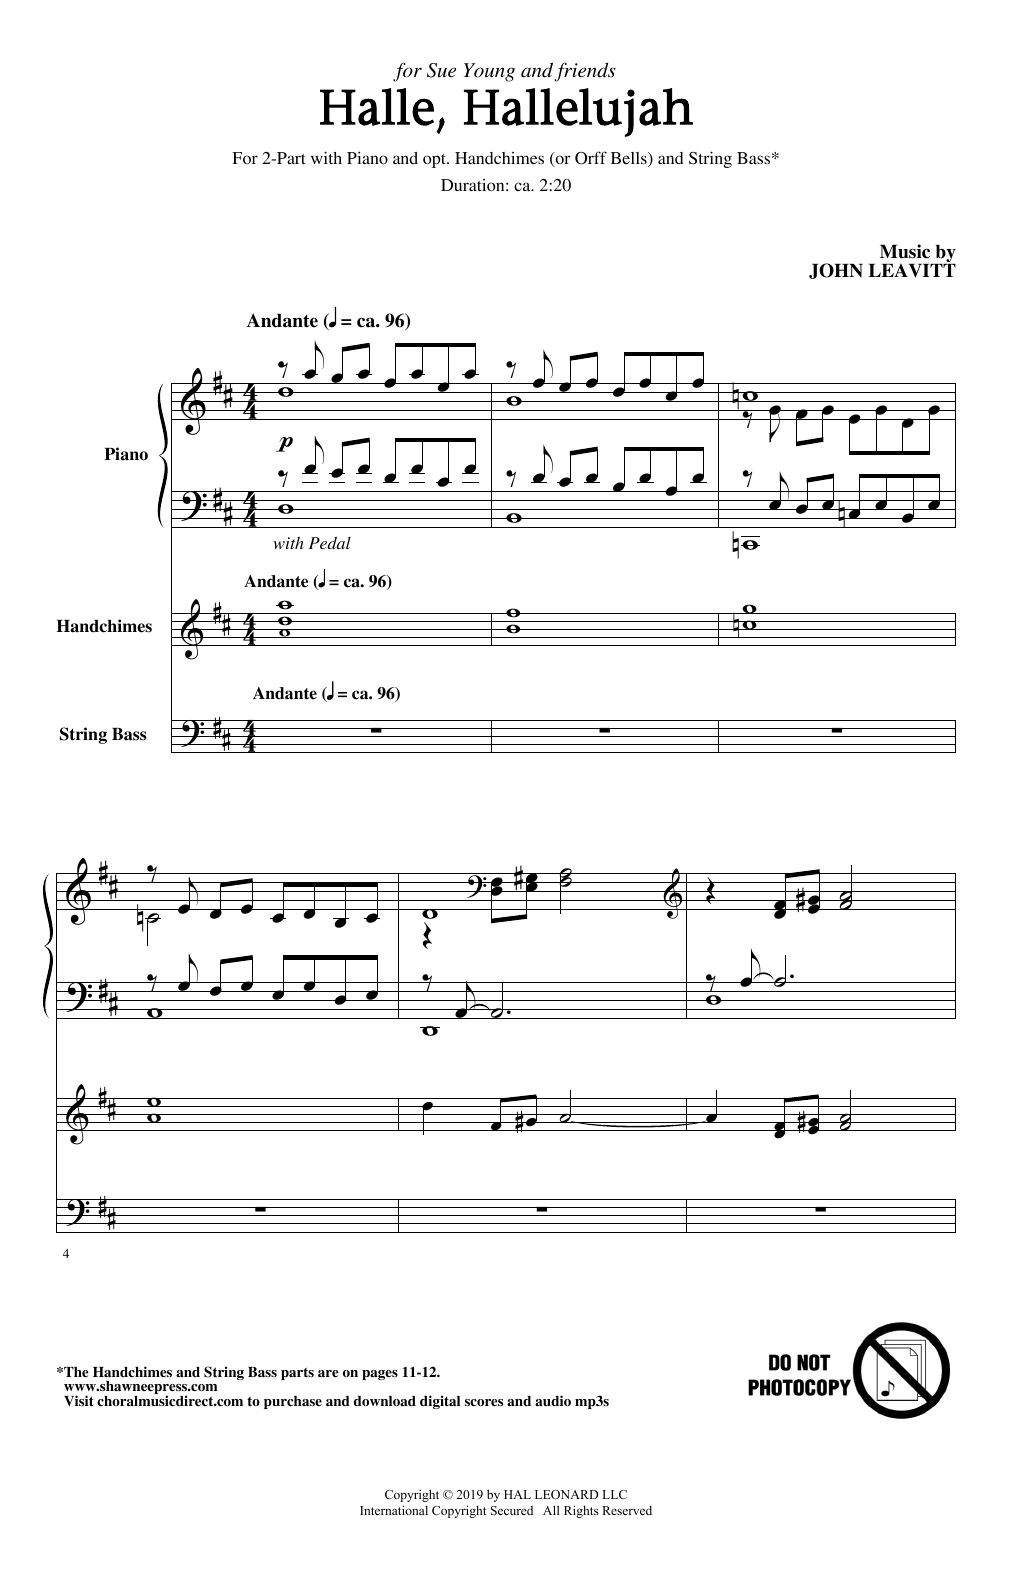 Download John Leavitt Halle, Hallelujah Sheet Music and learn how to play SAB Choir PDF digital score in minutes